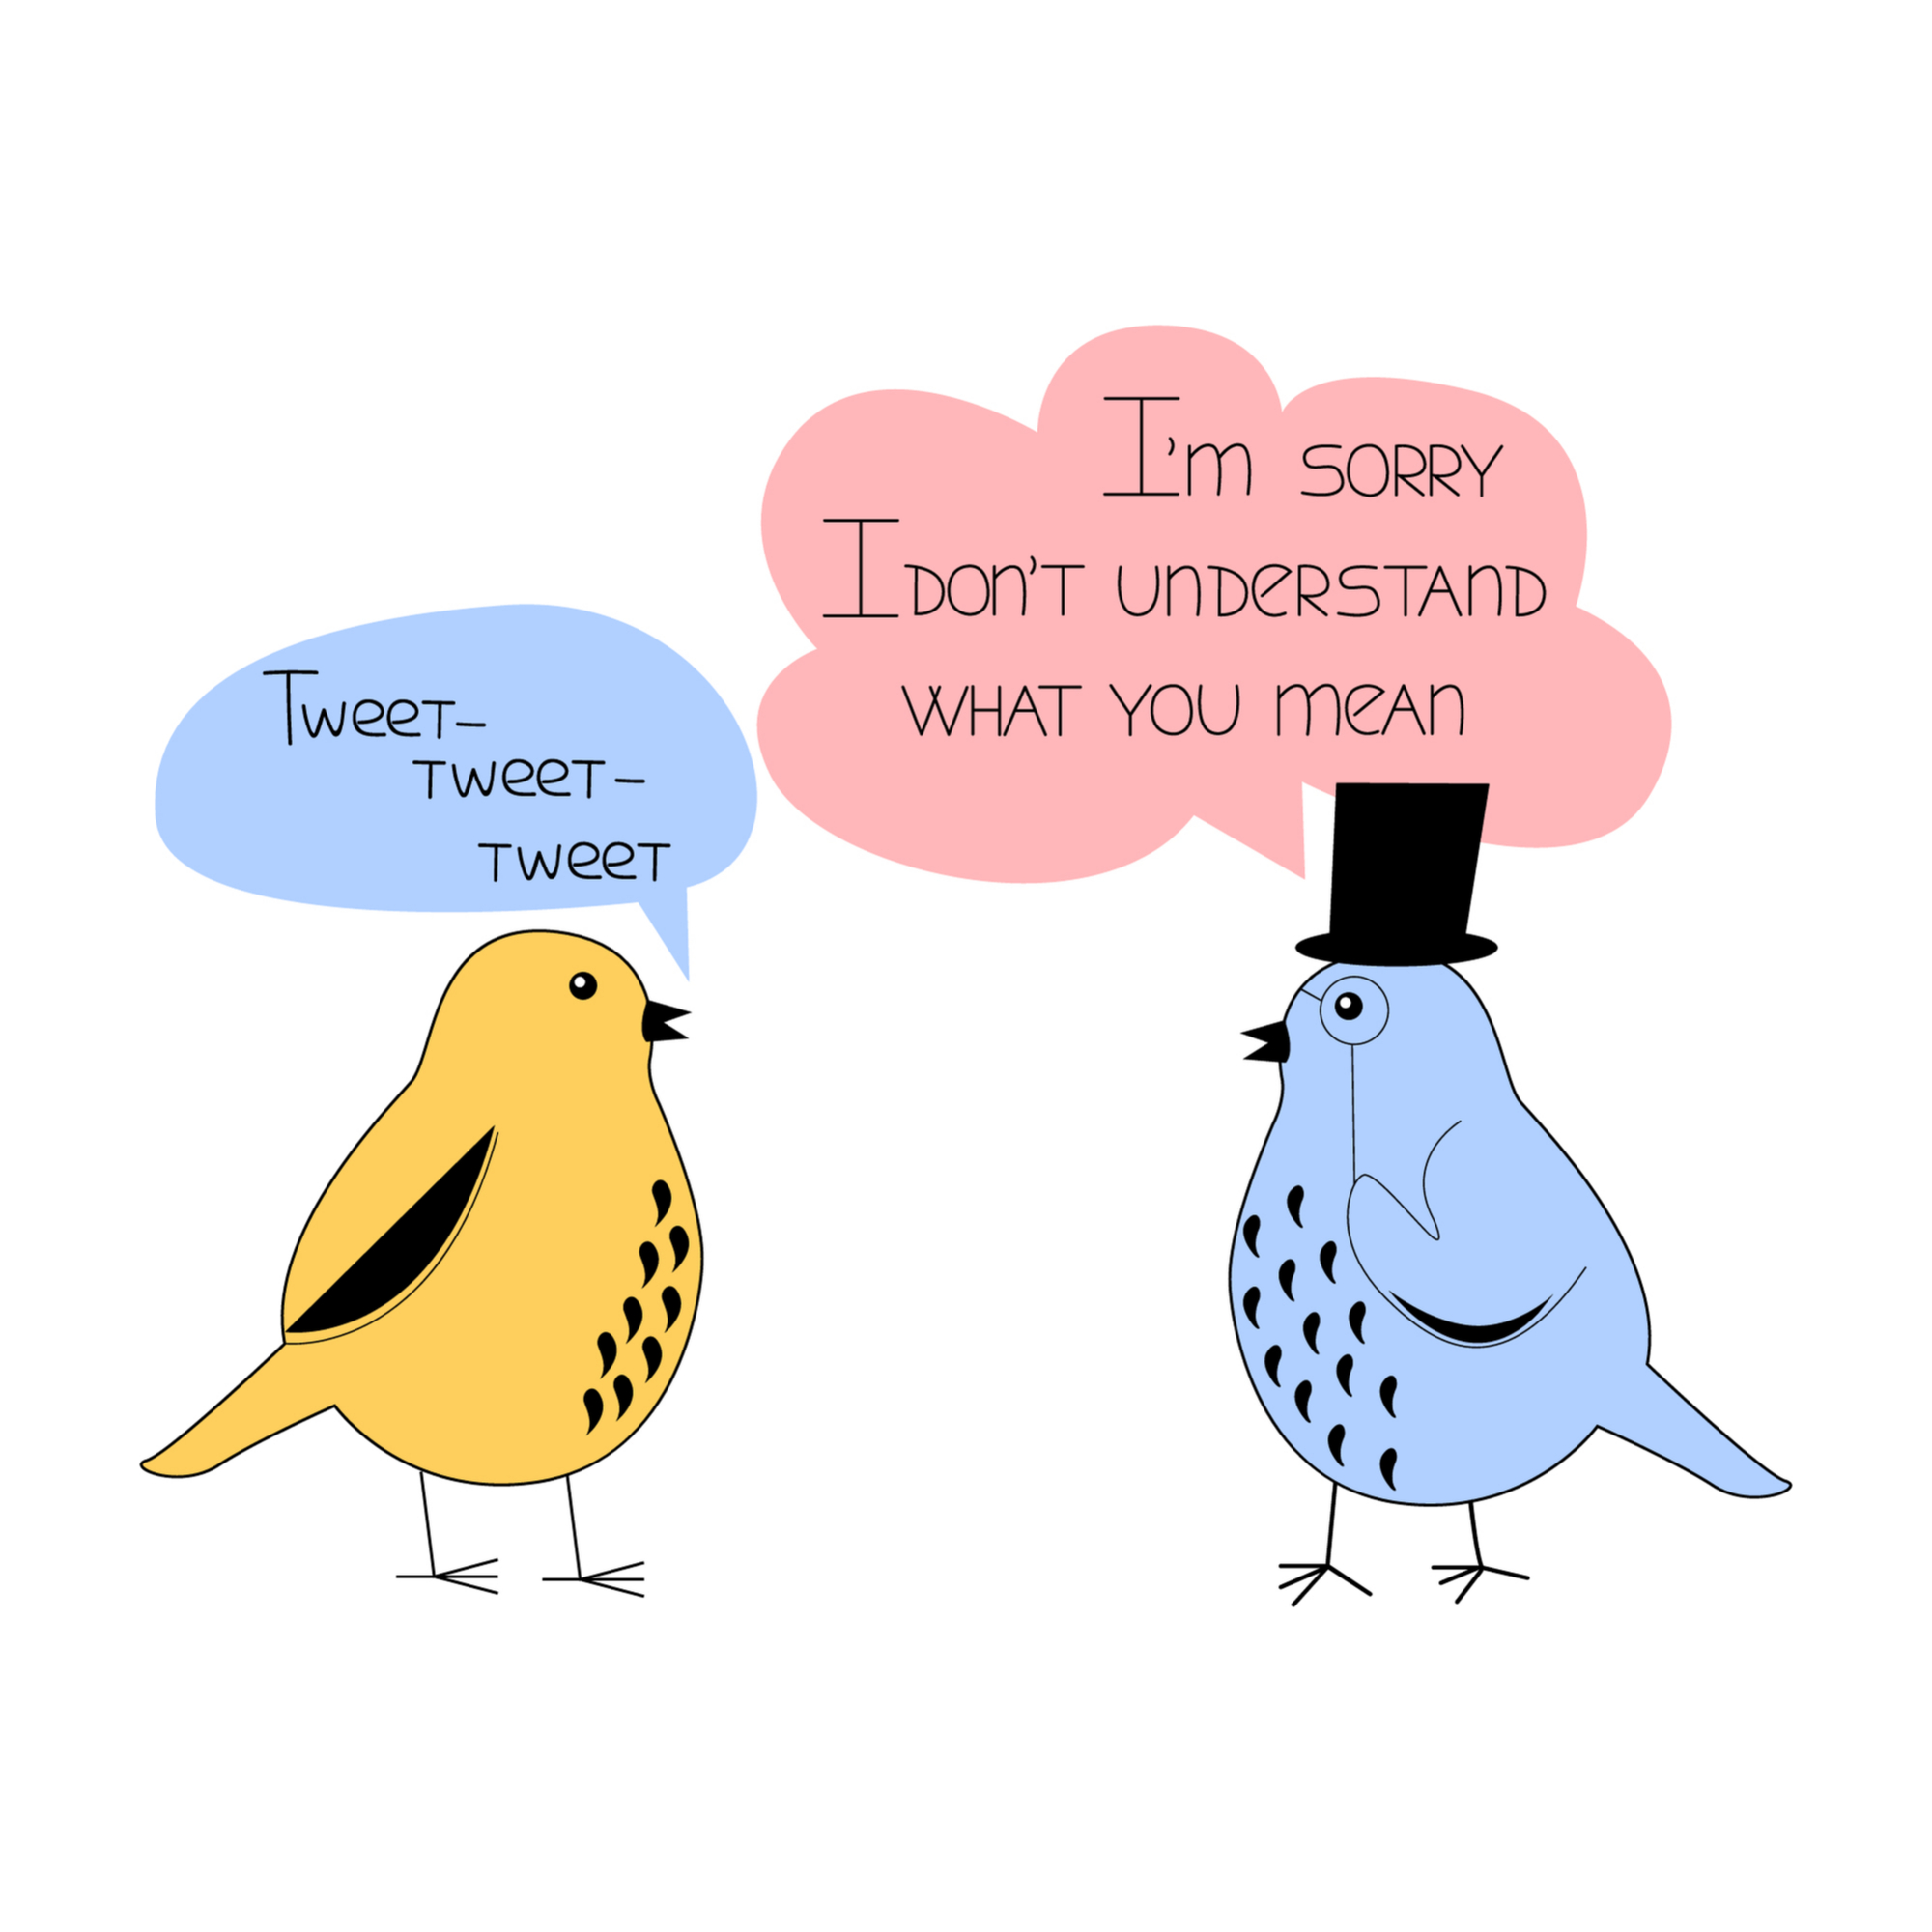 Bird spoke